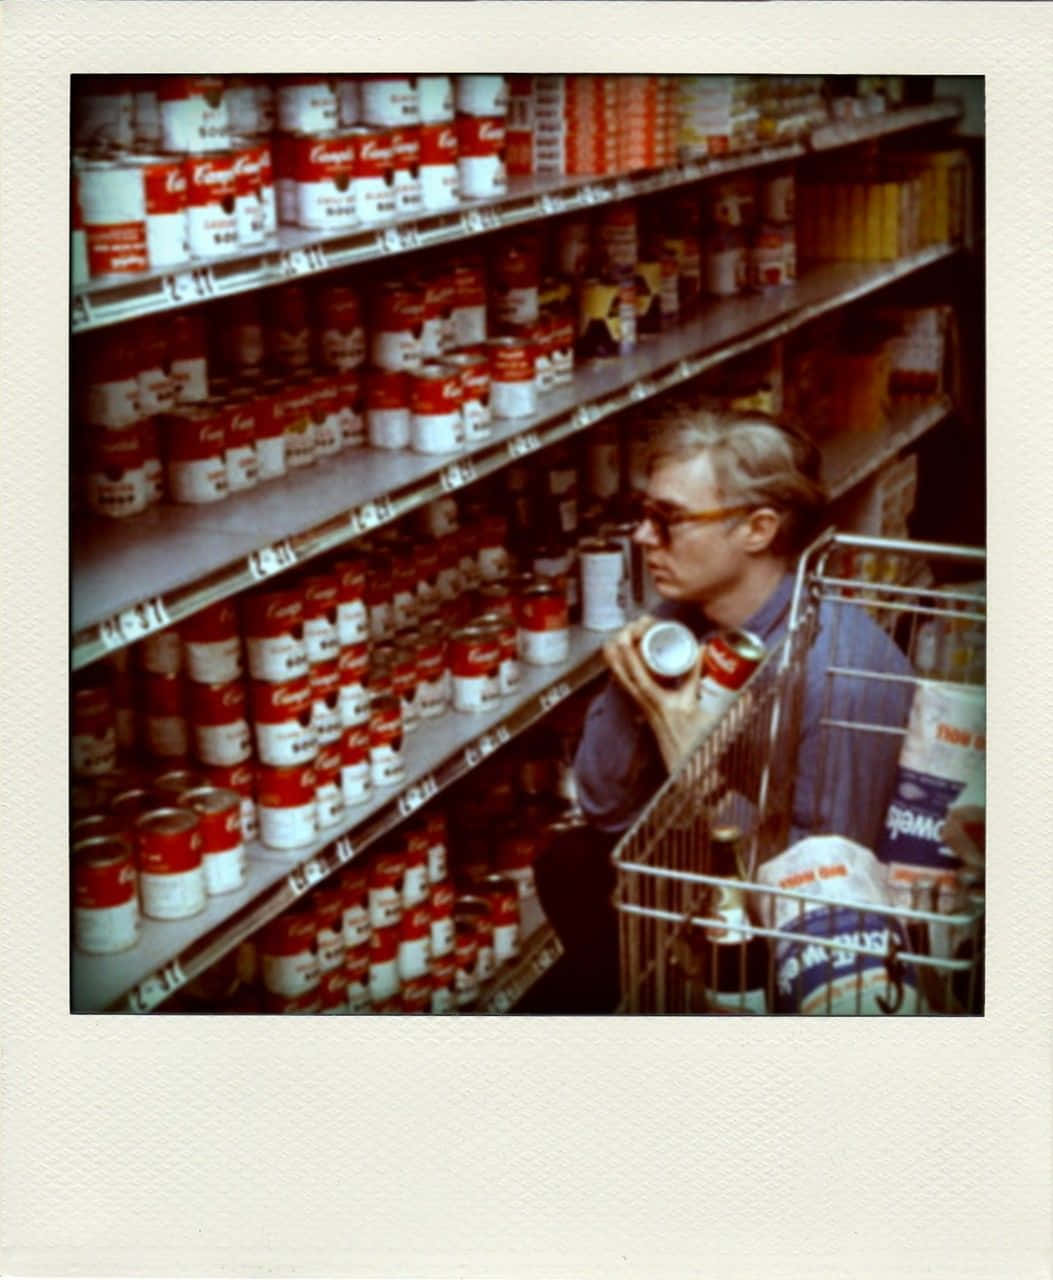 Andy Warhol, a revolutionary artist